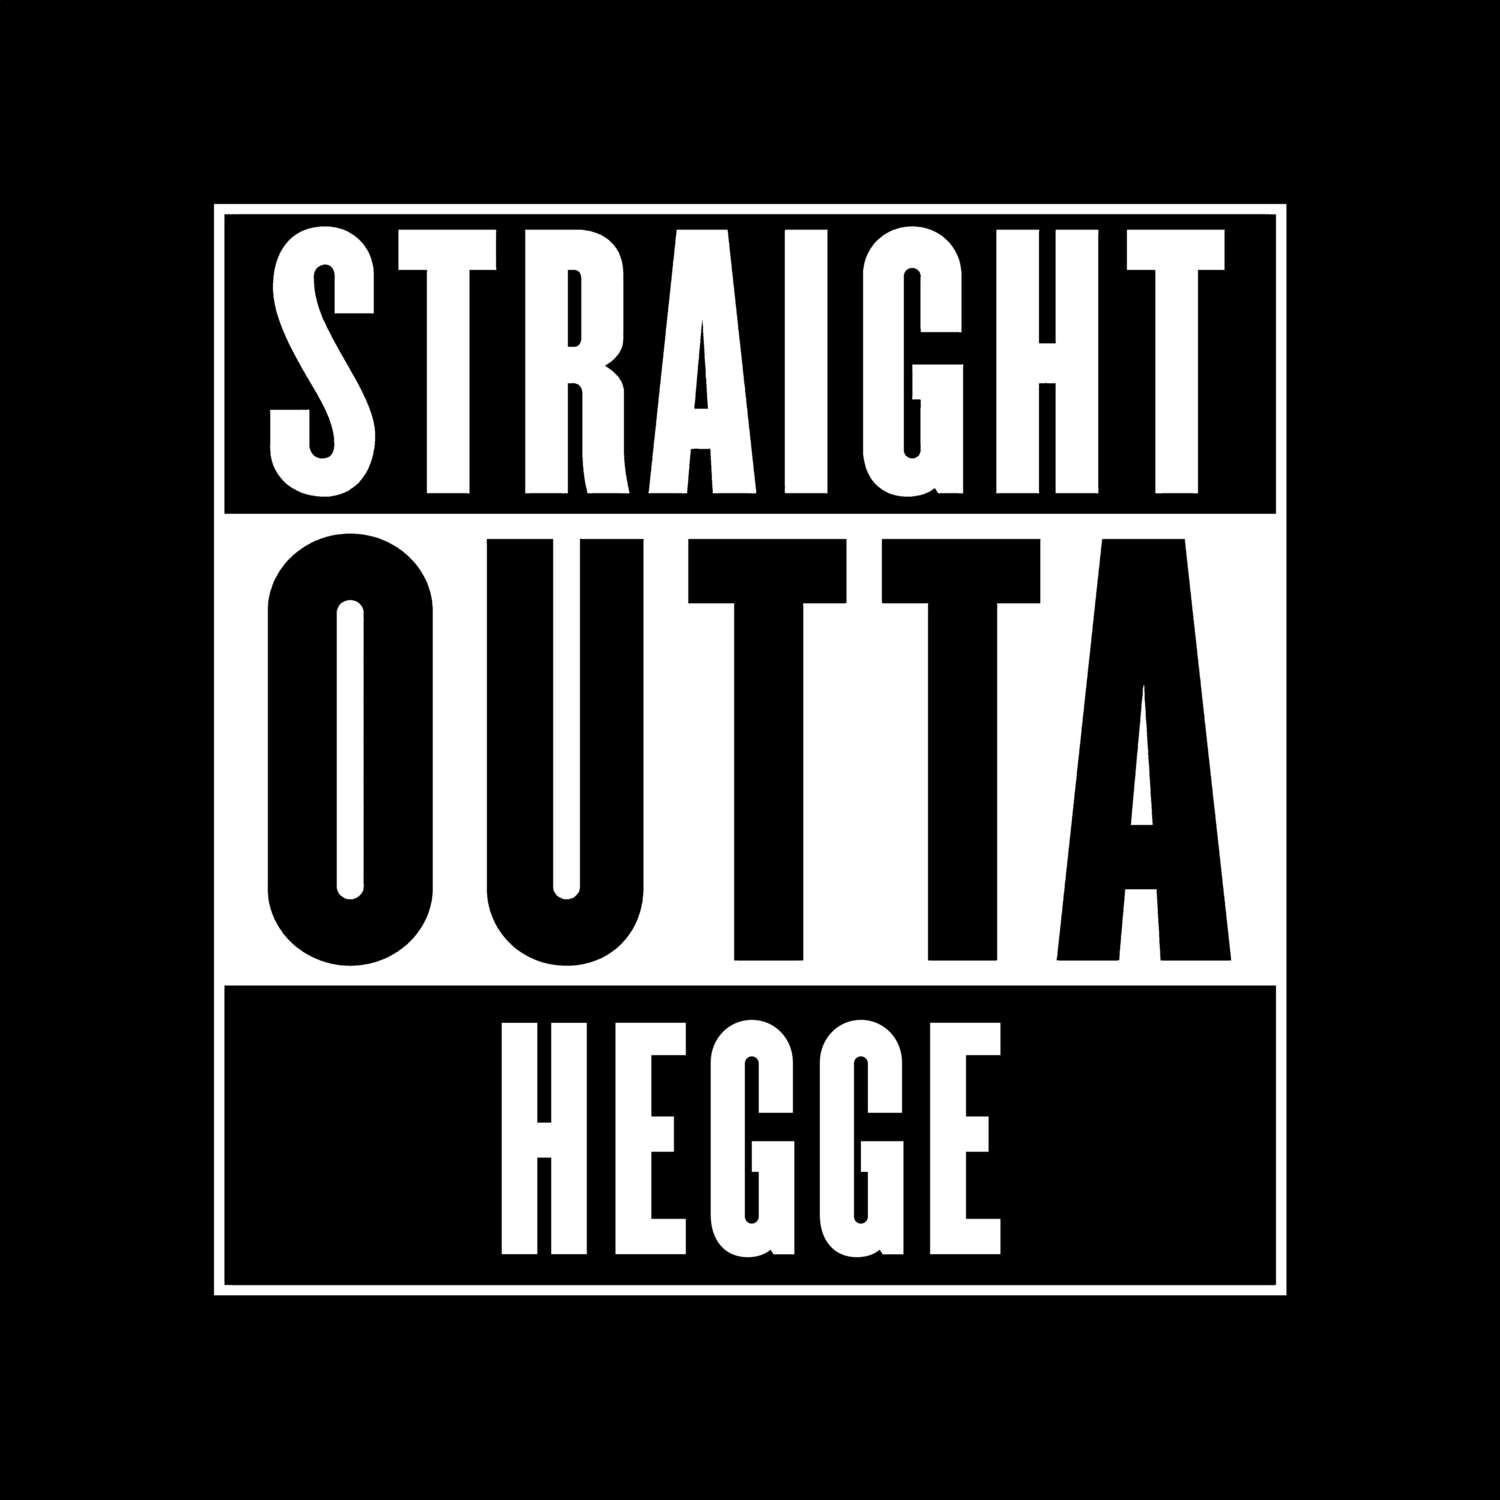 Hegge T-Shirt »Straight Outta«